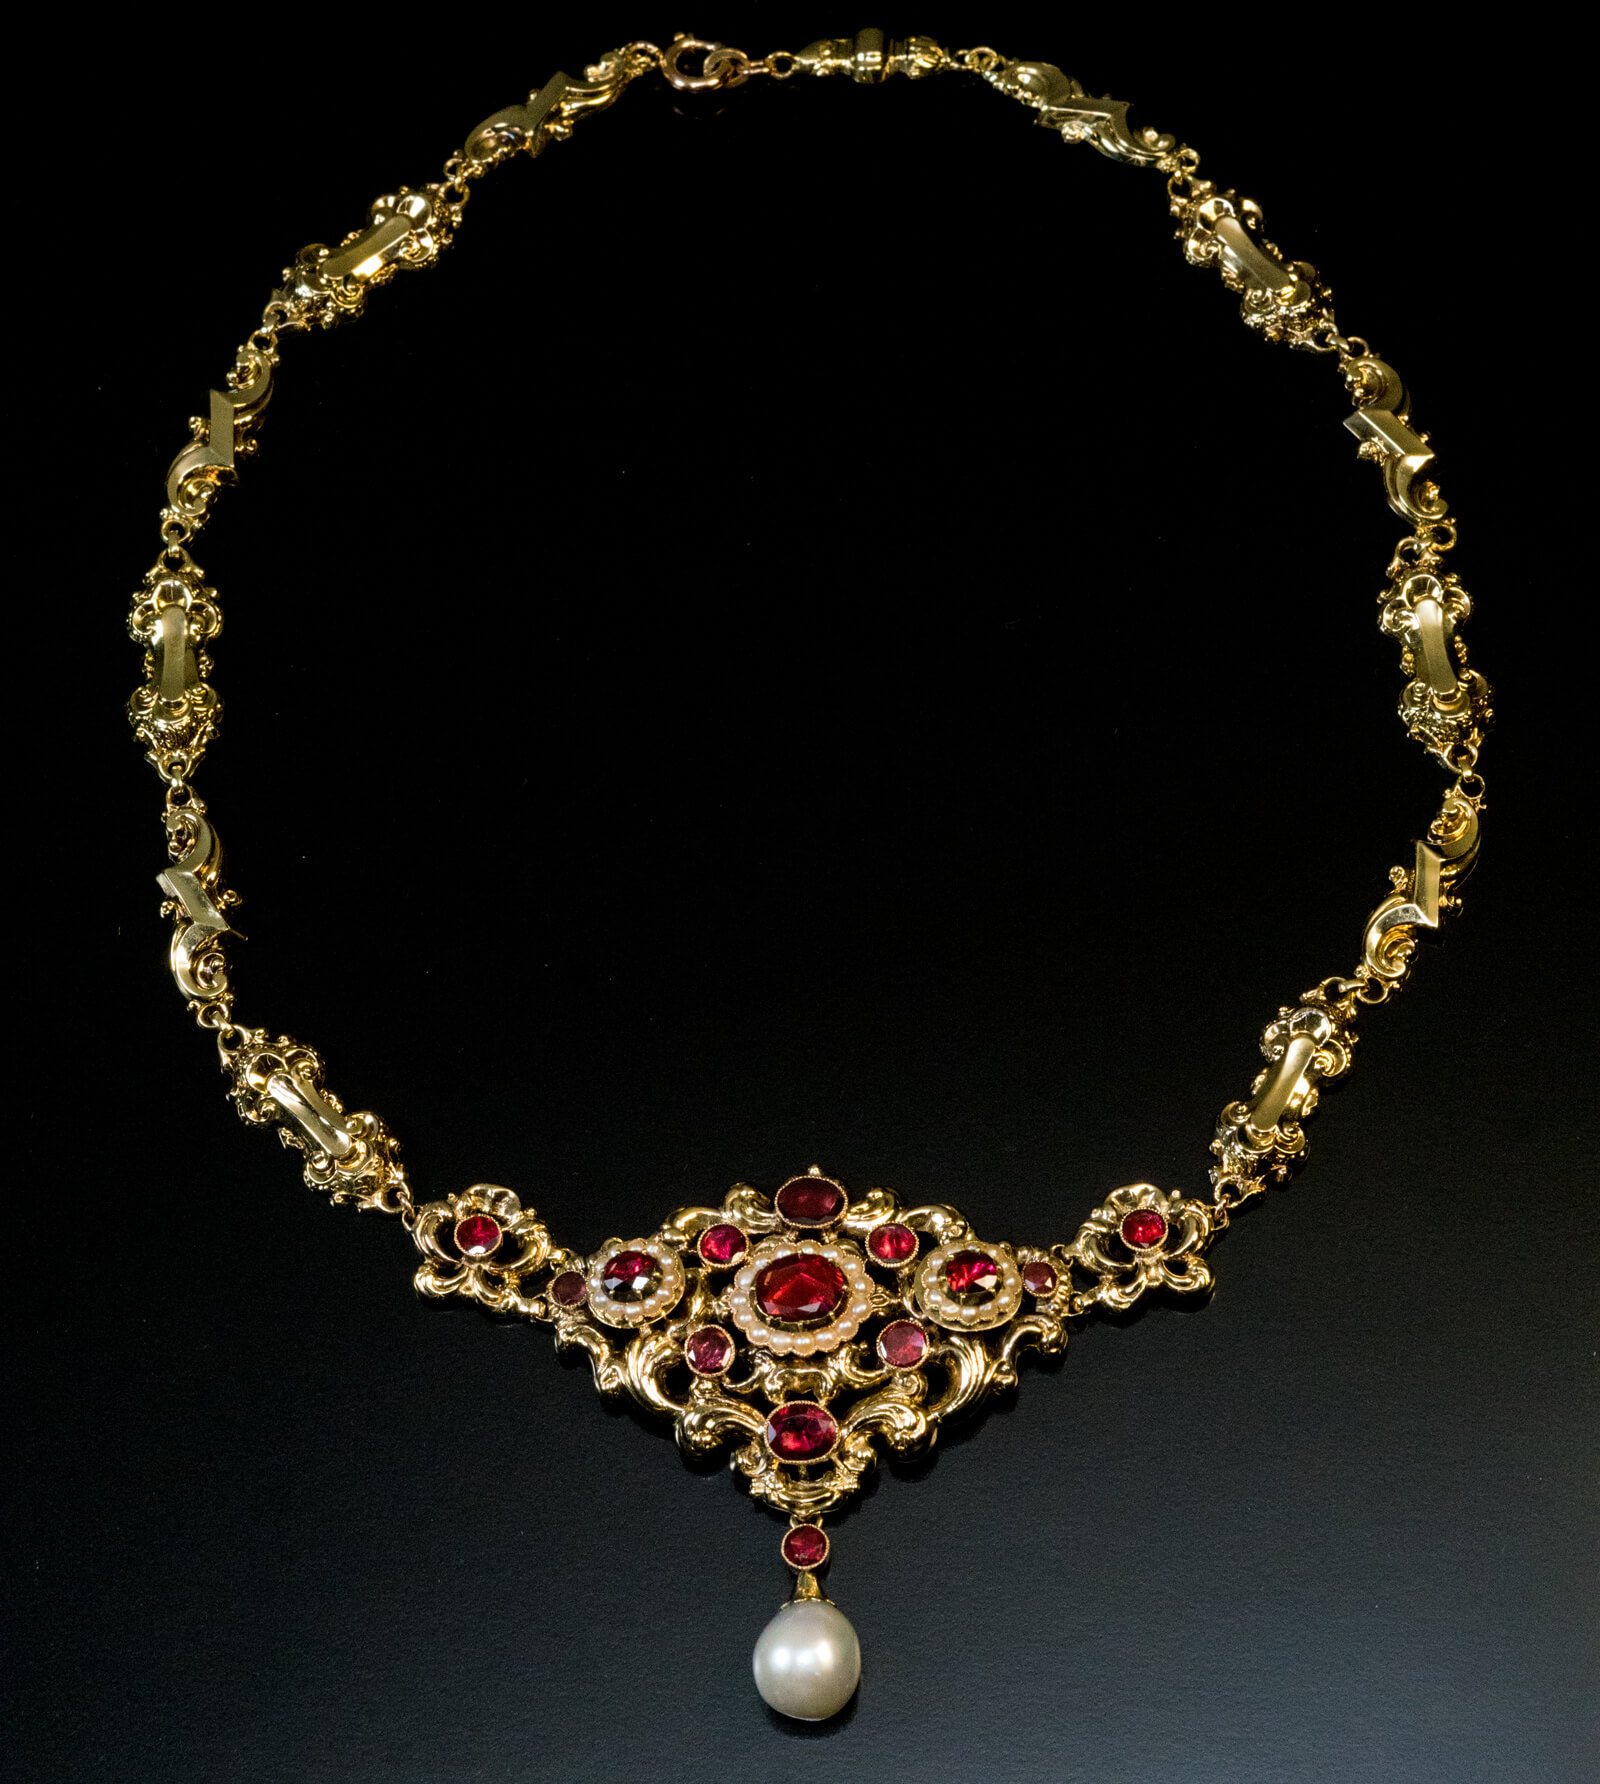 Renaissance Revival Jewelry